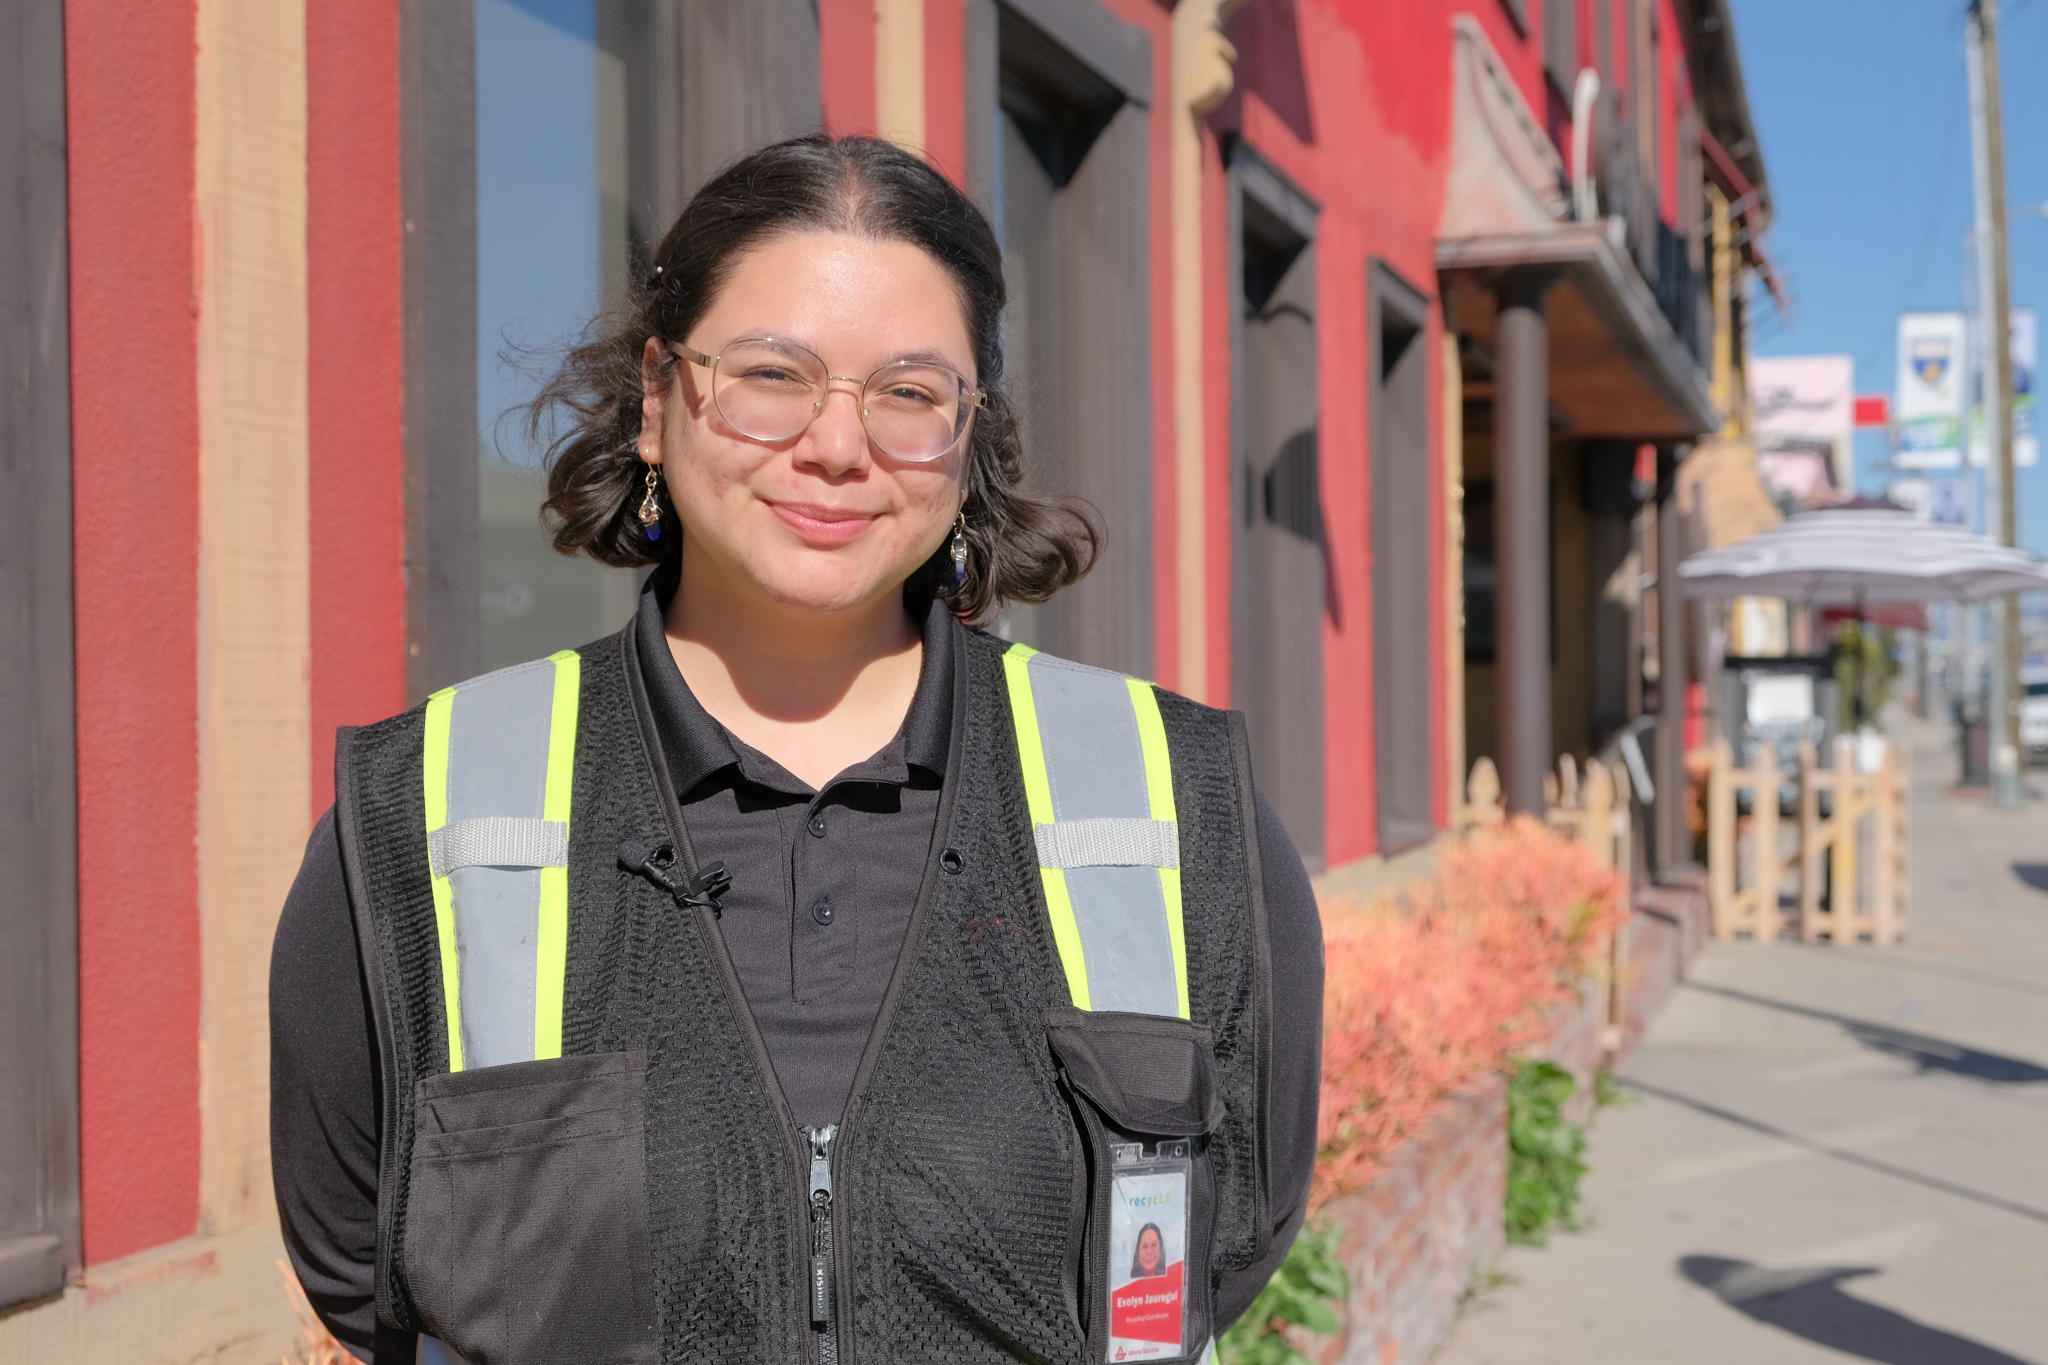 Athens' Recycling Coordinator Evelyn Jauregui